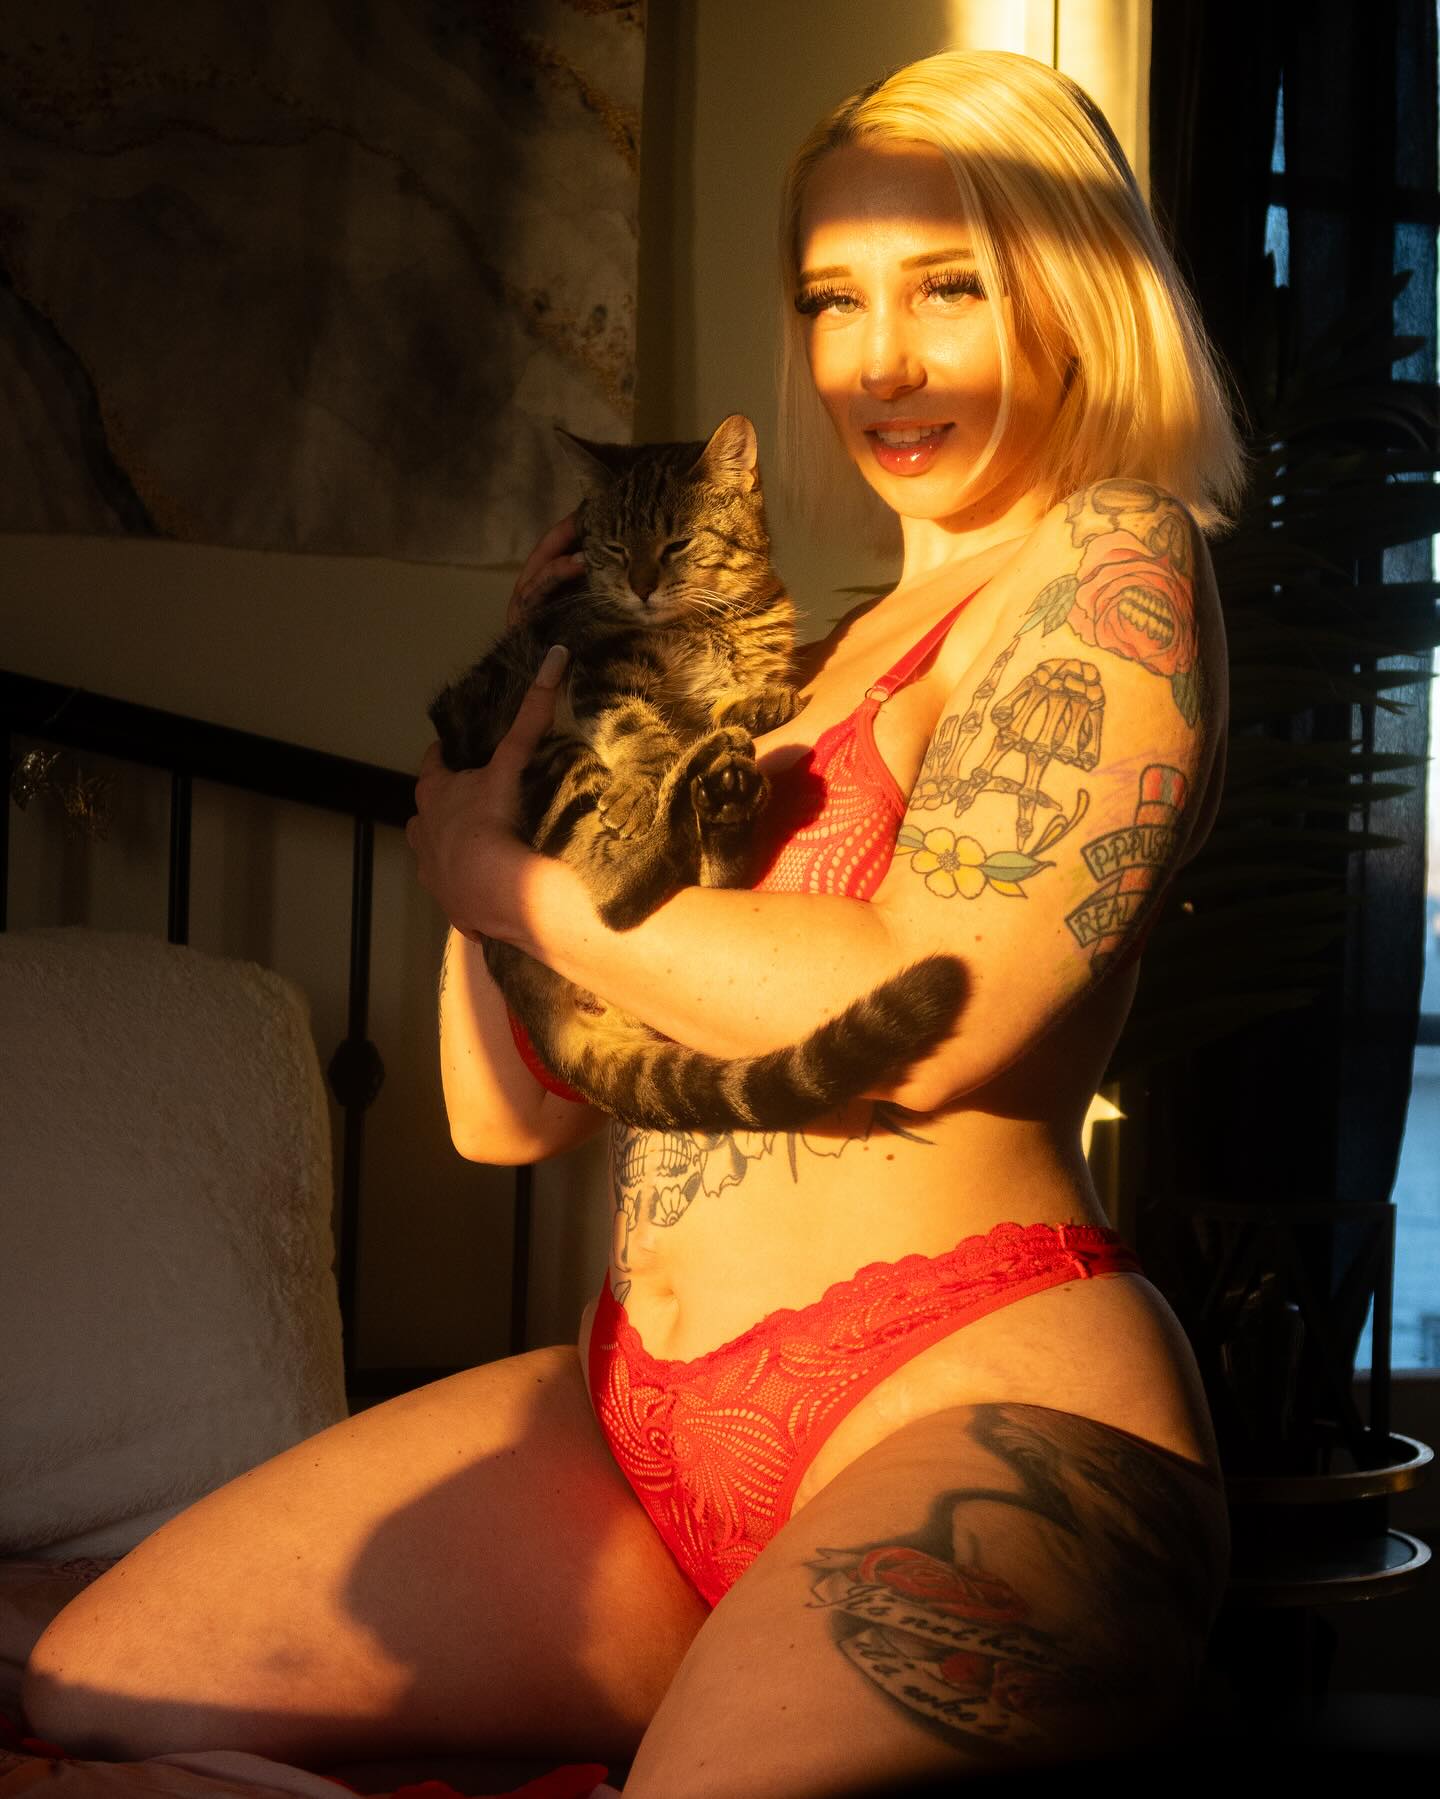 Valentines Kitty 🌹🐈 
.
Model: @caitlinzielinskiofficialmodel 
📸: @cvrrent.flow 

.
#model #valentinesday #photoshoot #cat #kitten #lingerie